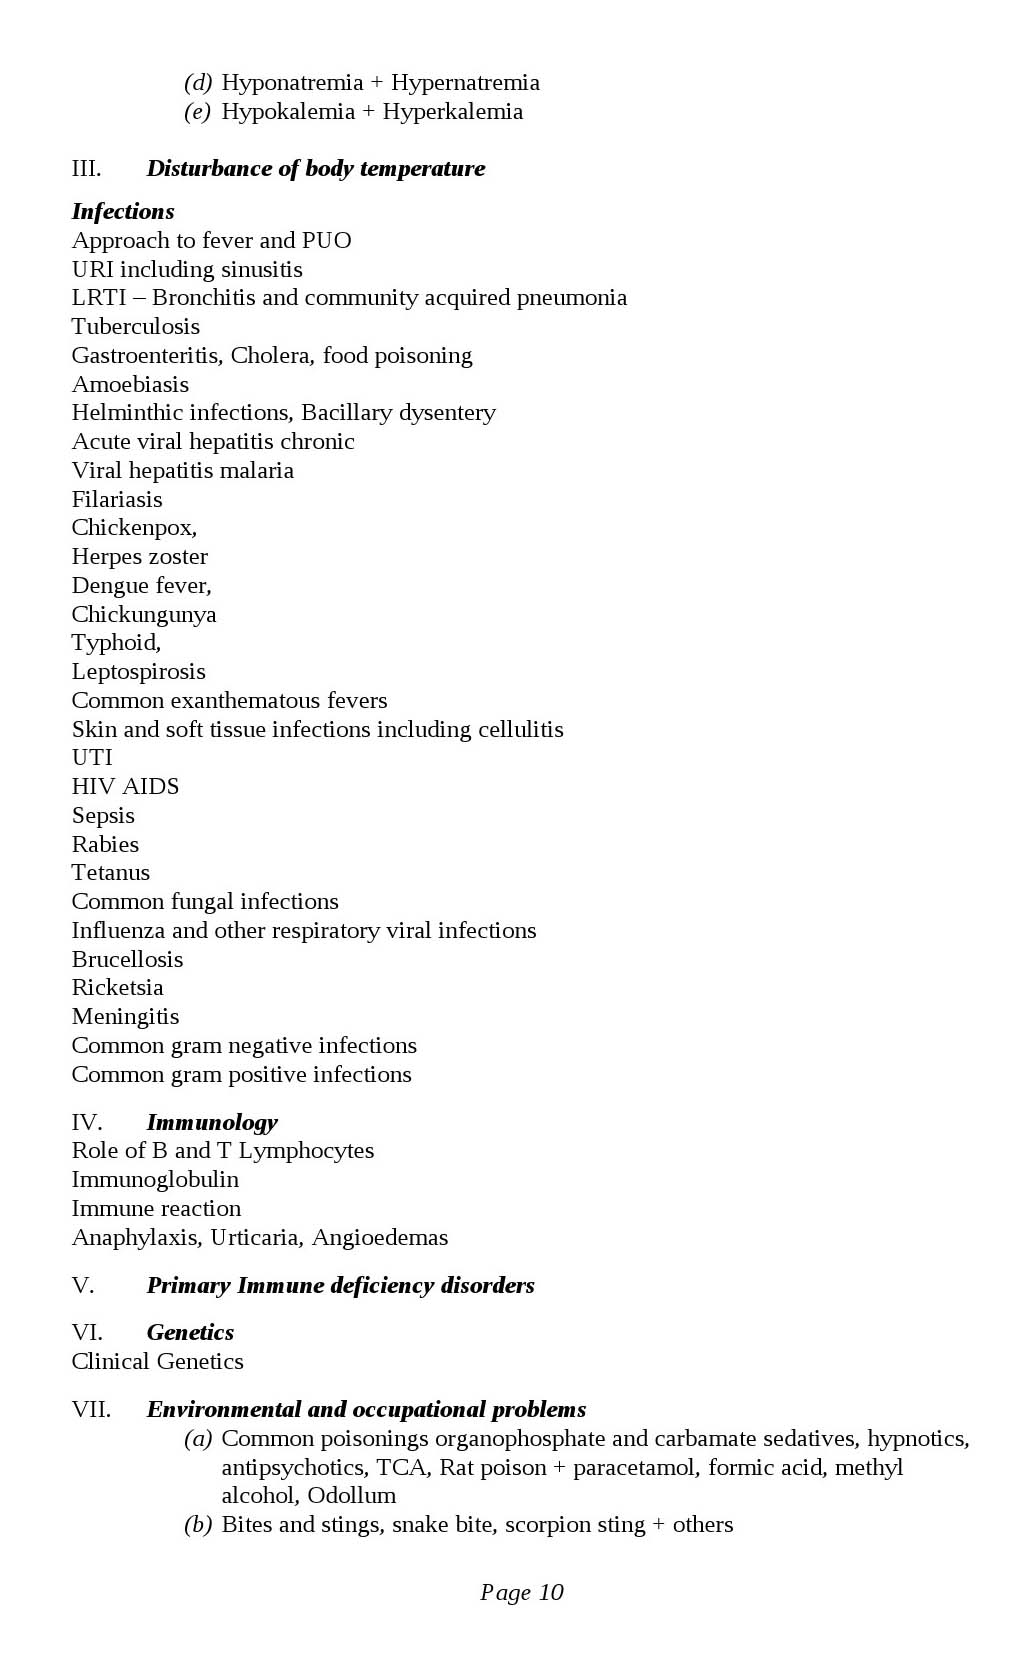 Kerala PSC Assistant Surgeon Exam Syllabus May 2020 - Notification Image 10